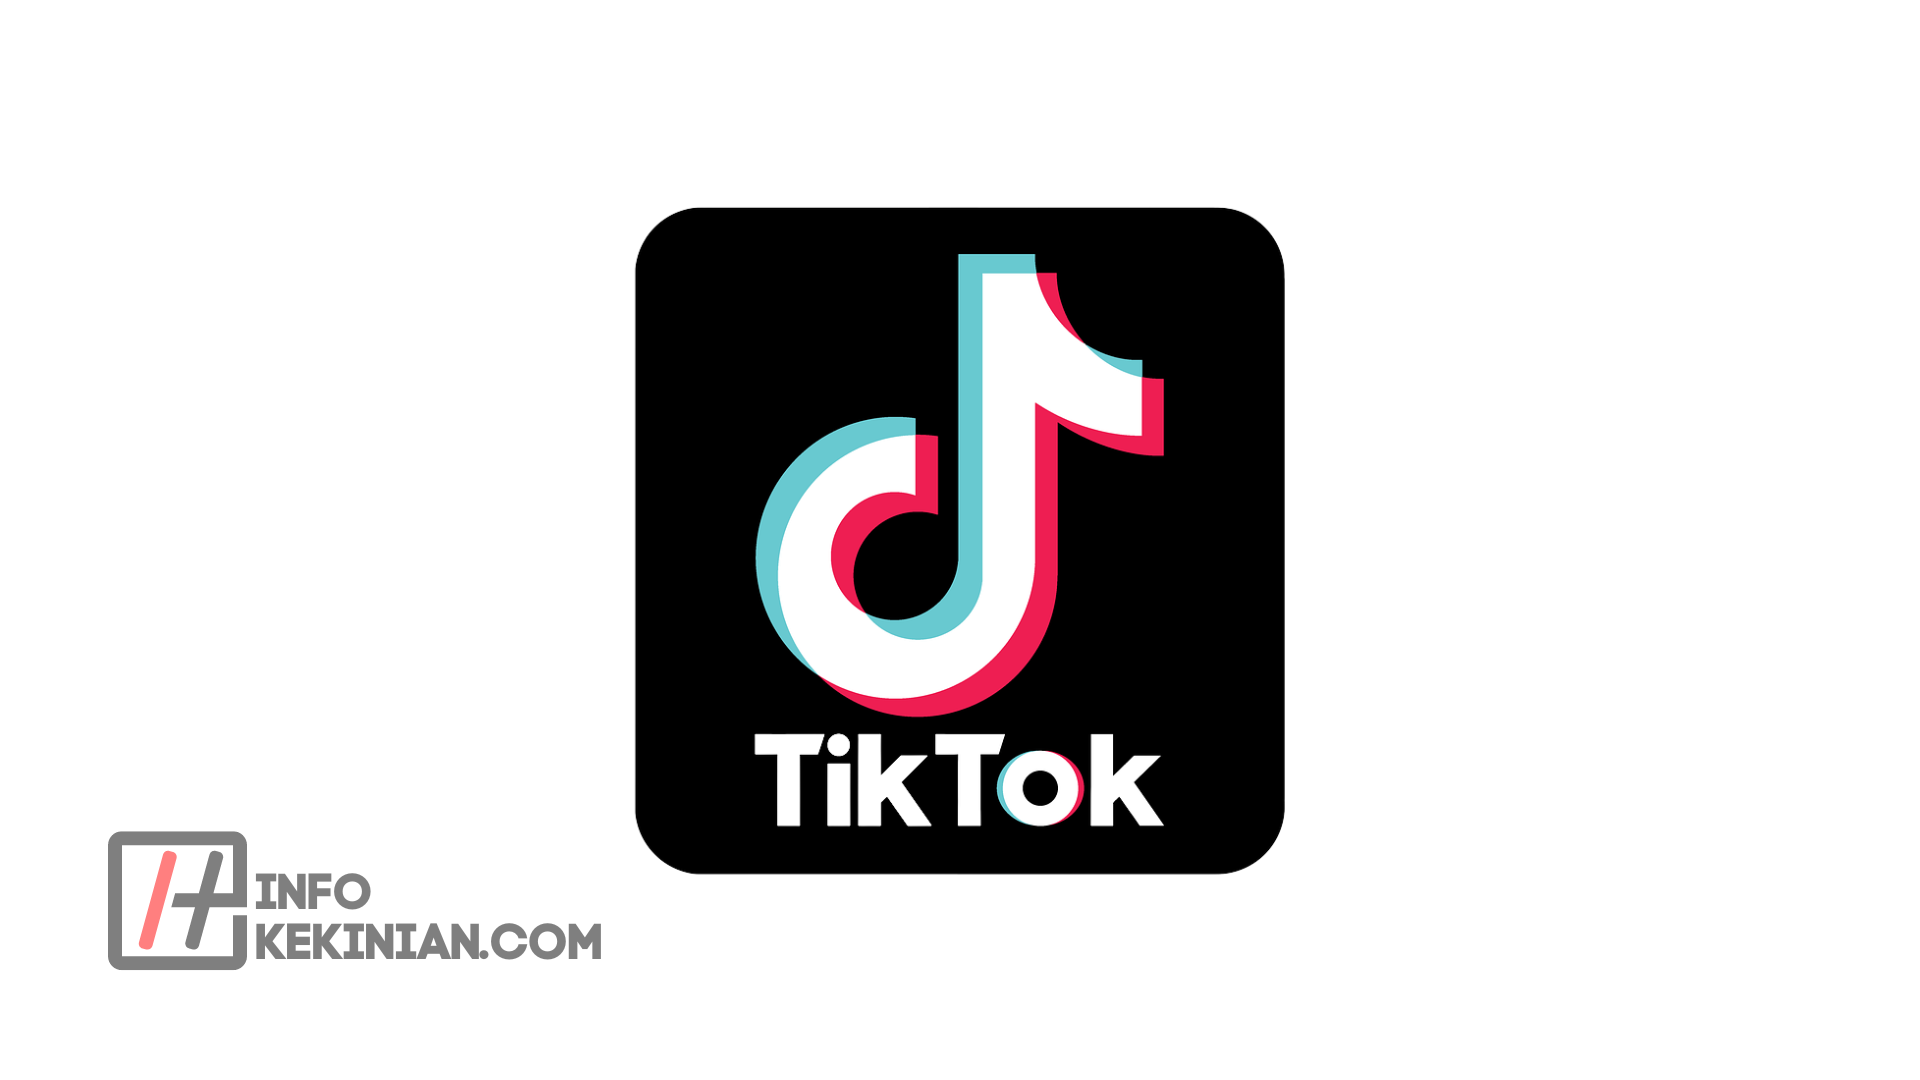 How to Change Username on TikTok